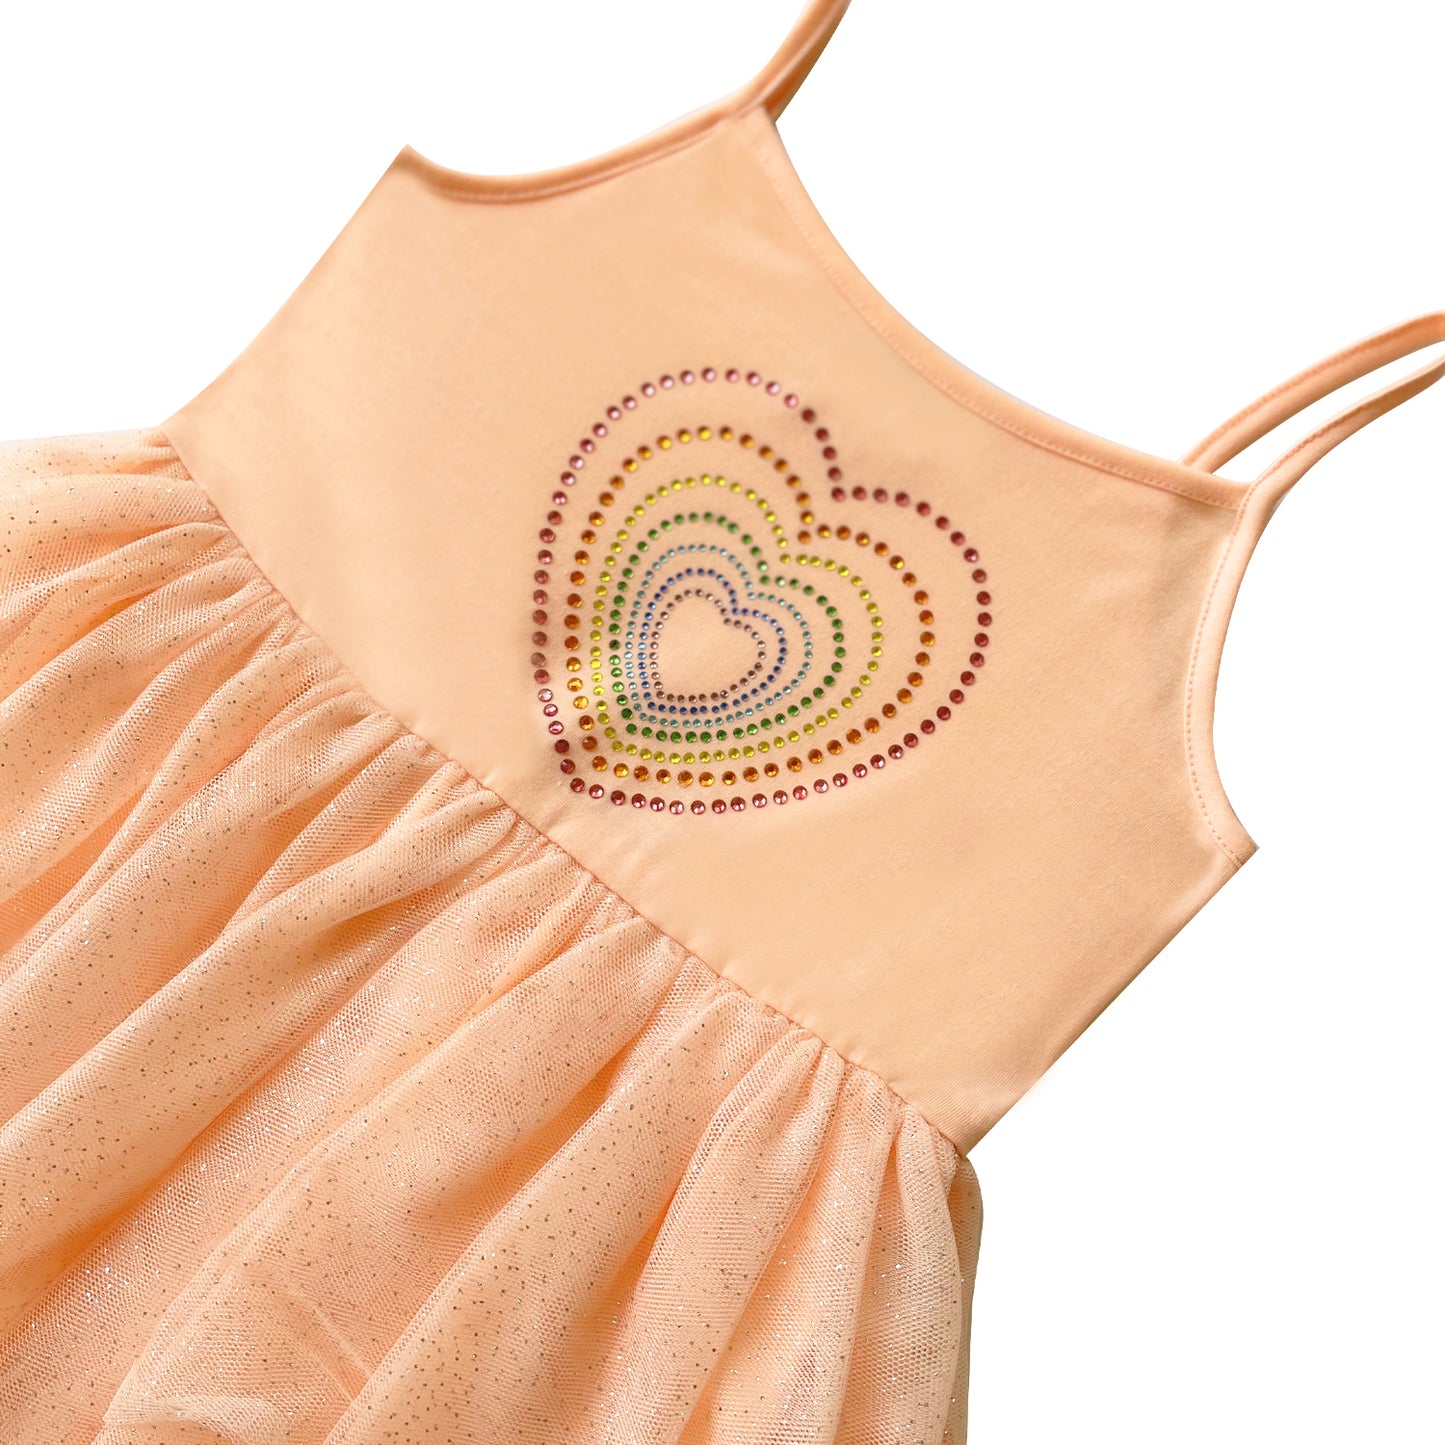 Girl's Peach Heart Tutu Dress For 3-7 Years #22008